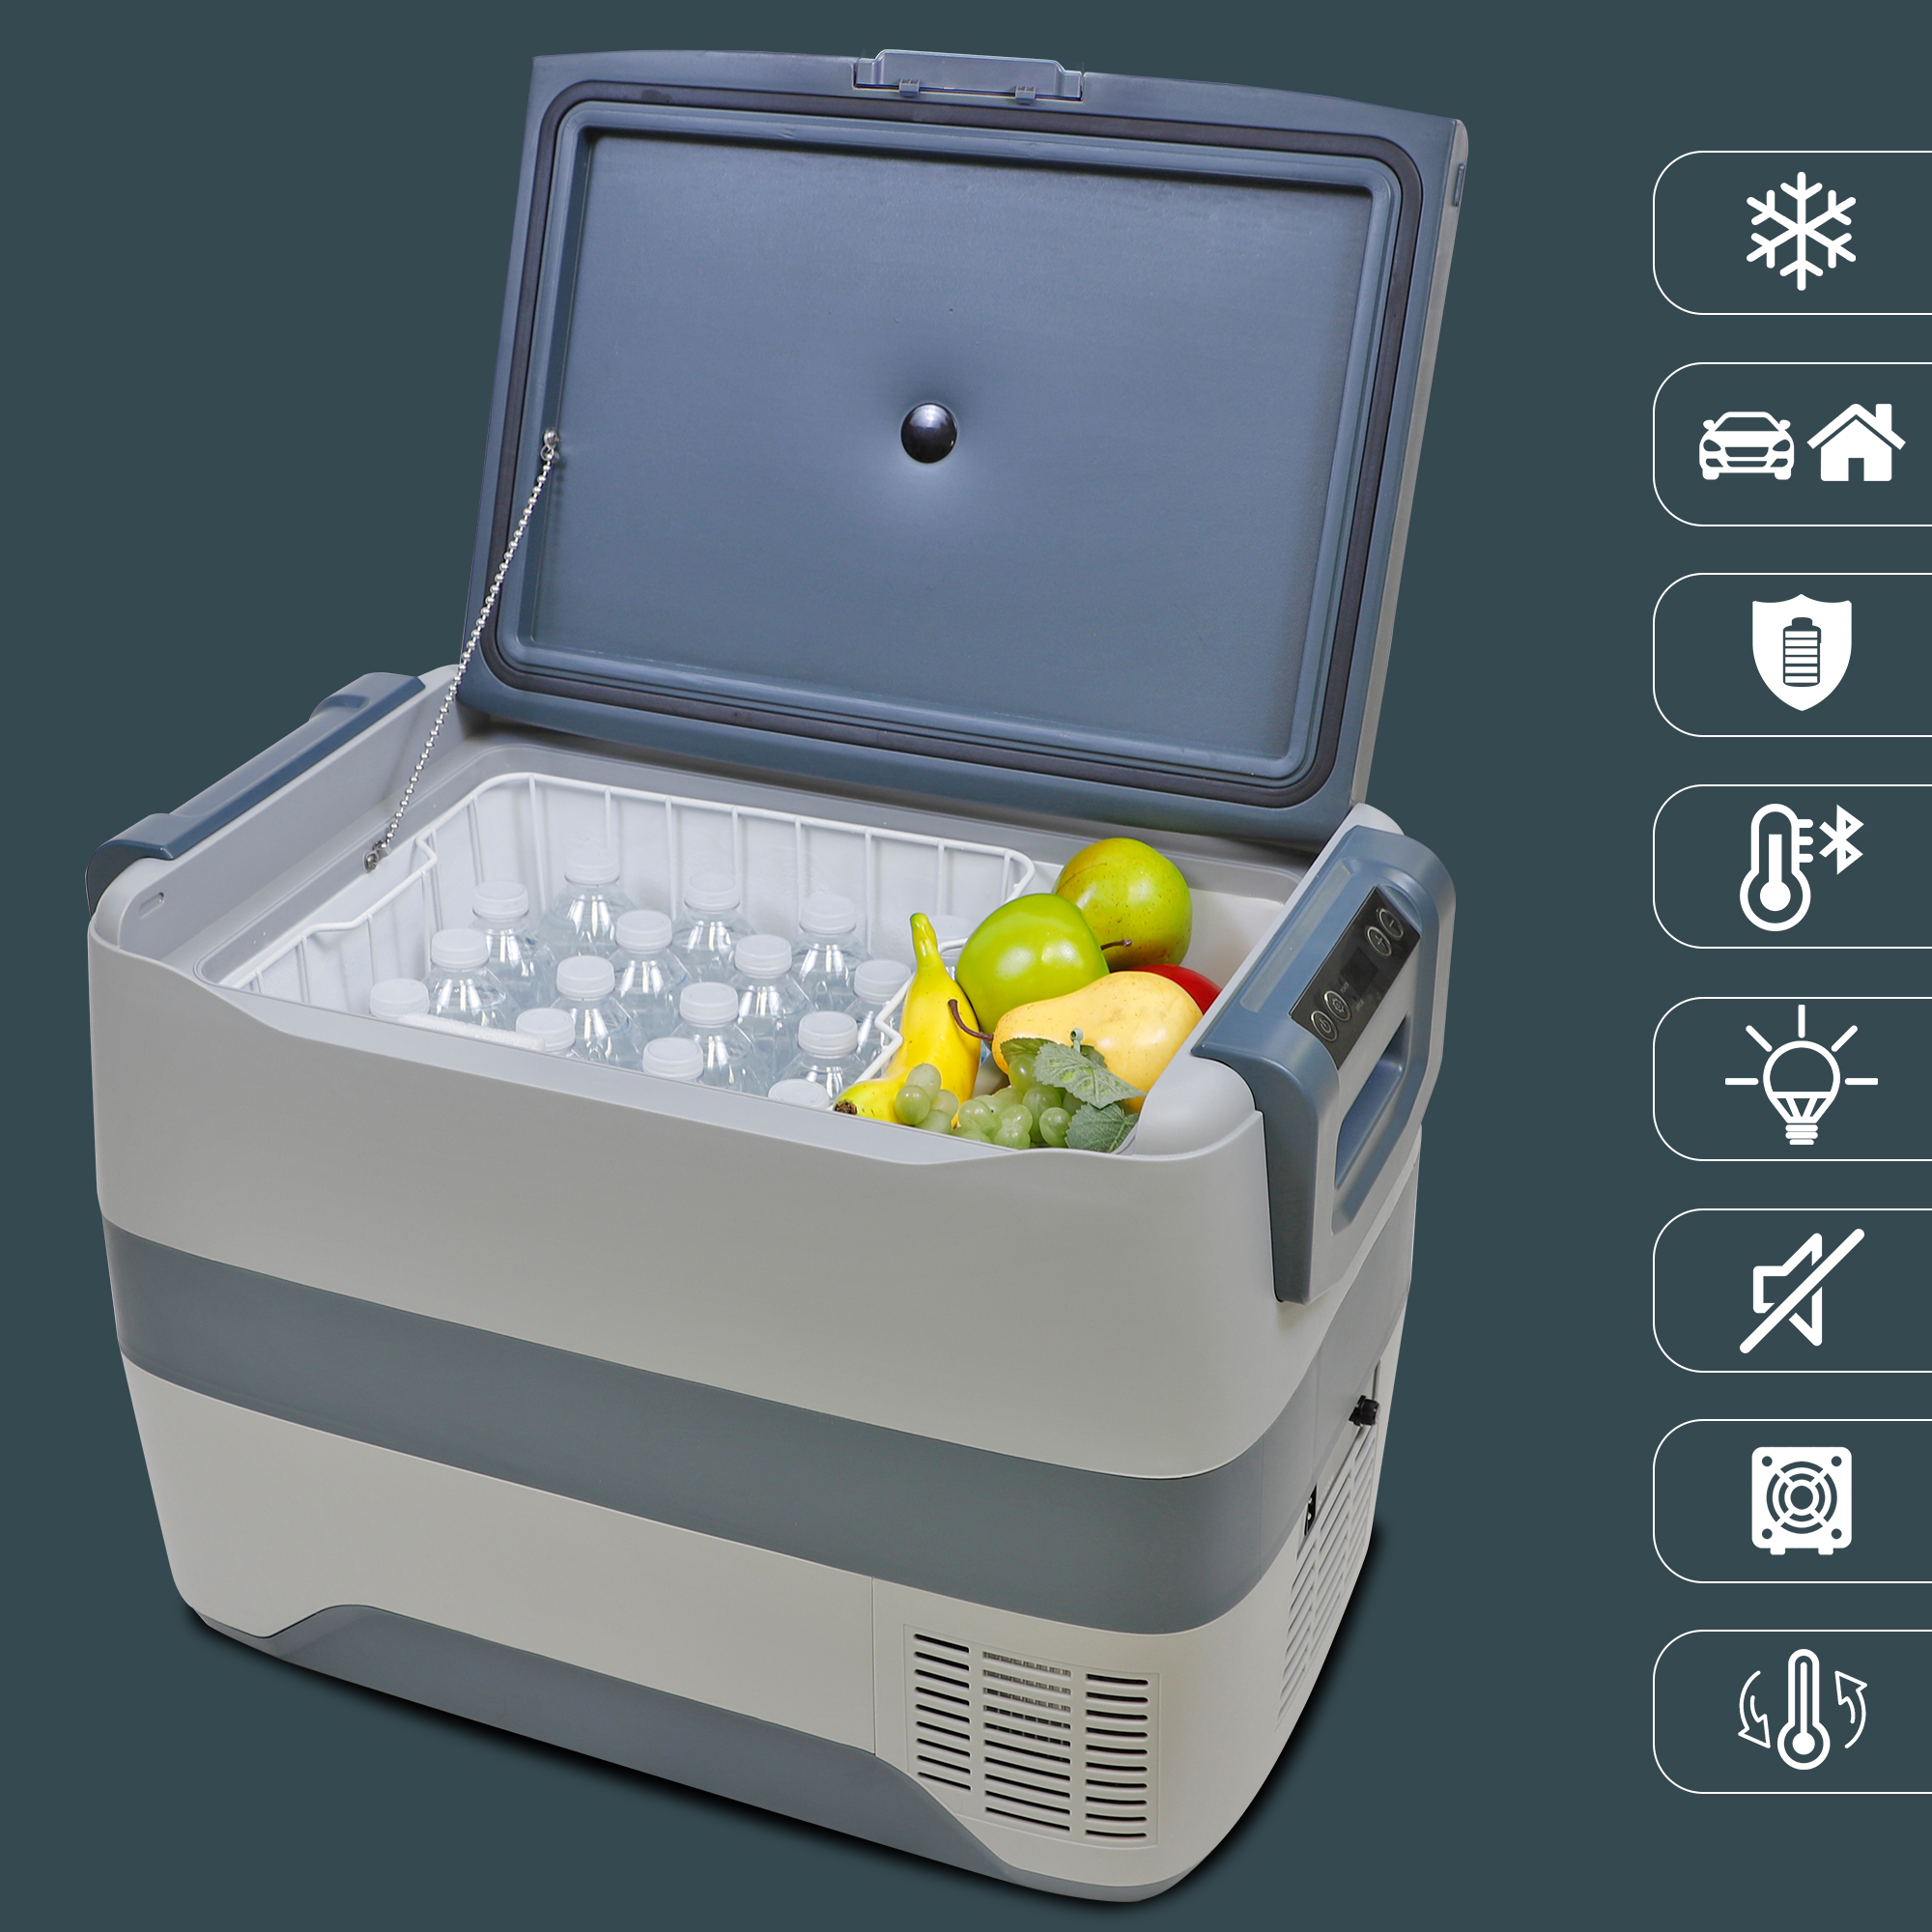 Koolatron 12V Portable Freezer/Refrigerator w/ Bluetooth, 42 qt (40L)